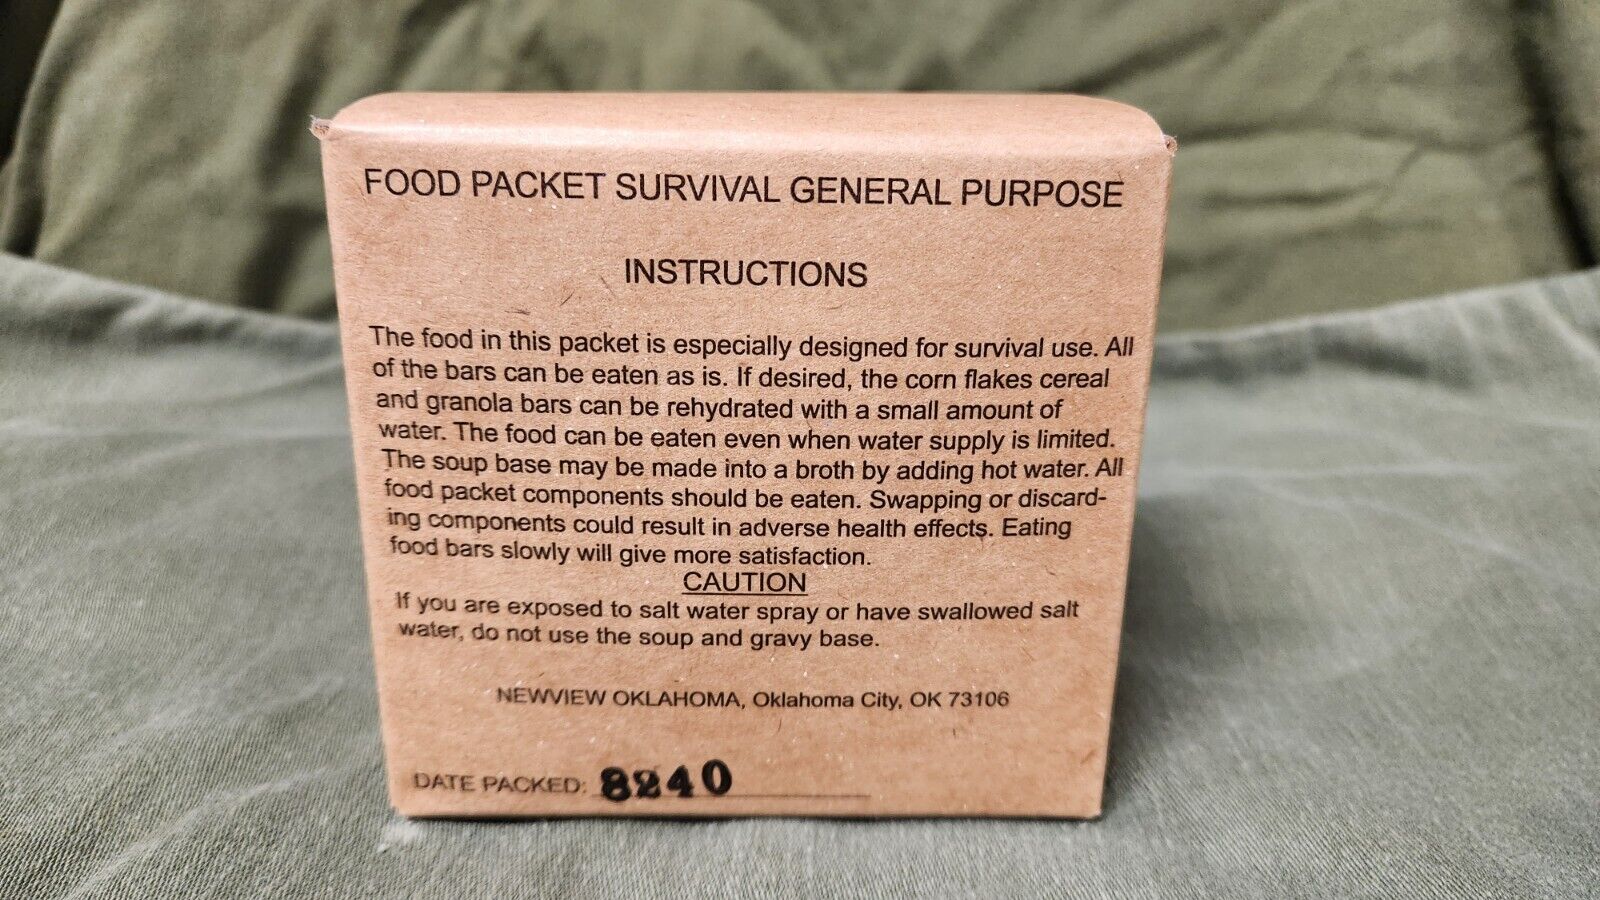 Food Packet Survival General Purpose FPSGP MRE Emergency Ration US Issue 2018